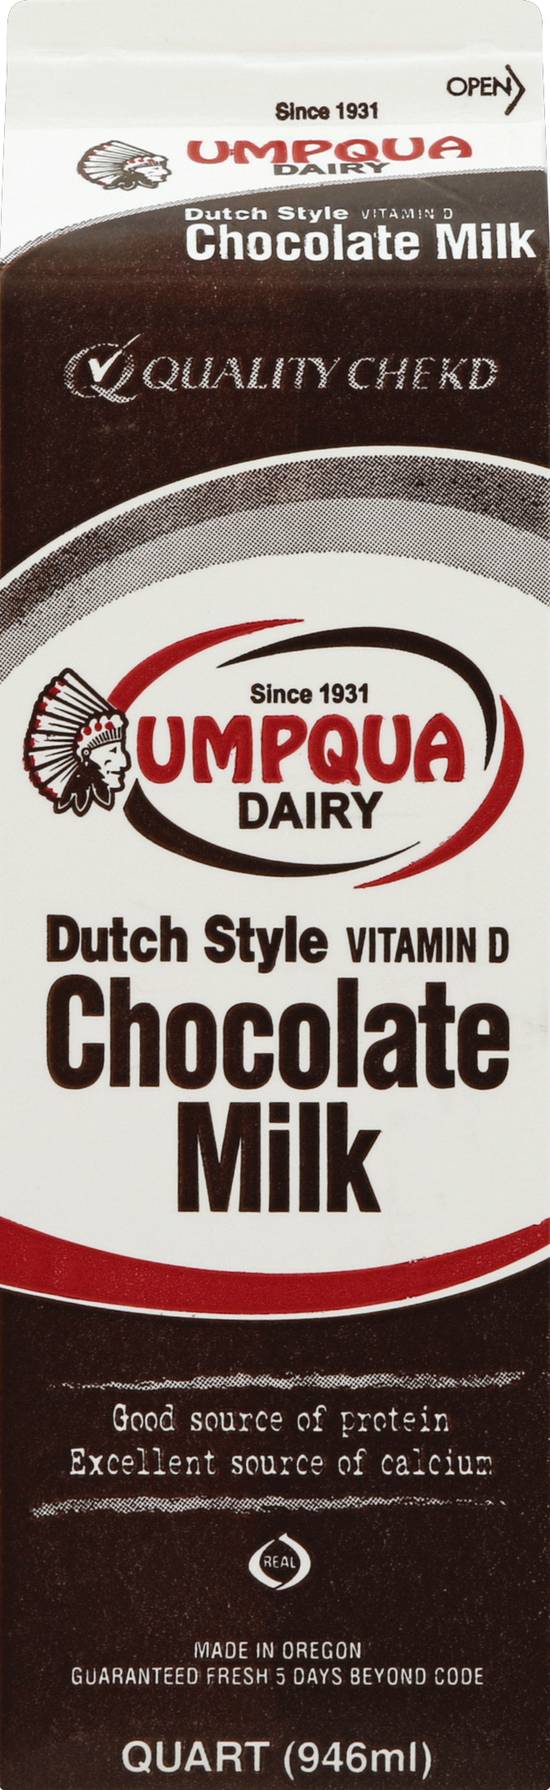 Umpqua Dairy Dutch Style Chocolate Milk (1 quart)